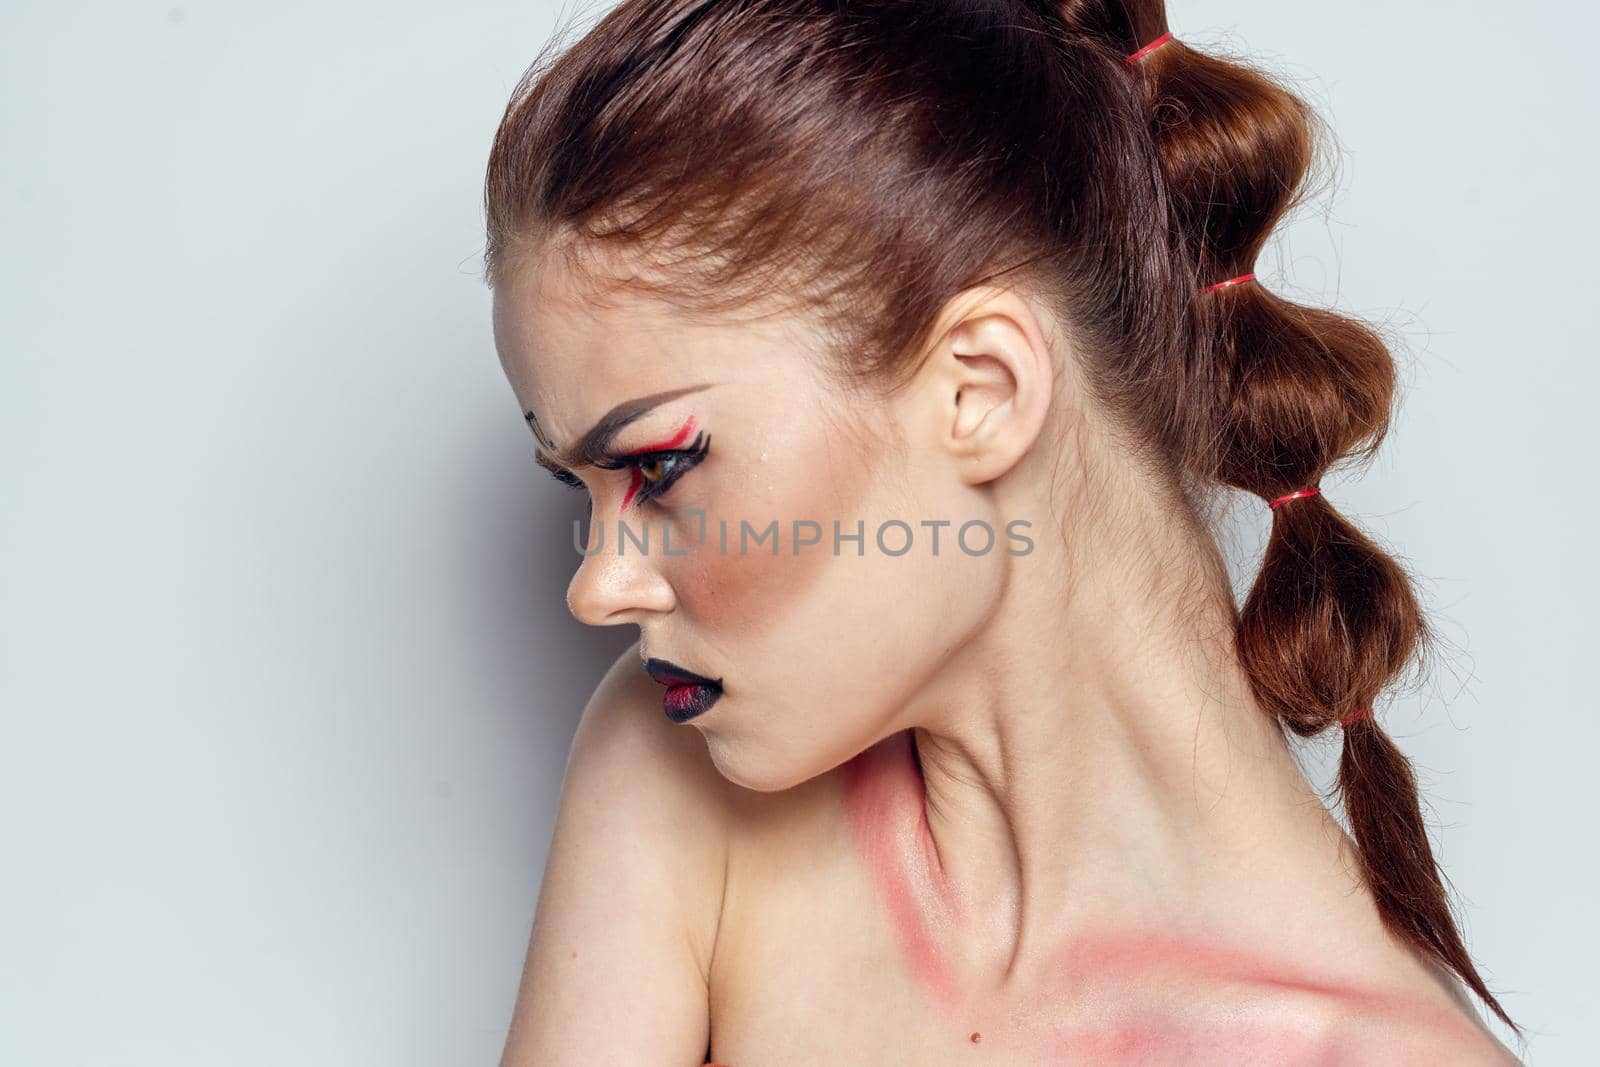 beautiful woman posing scorpio sign on forehead cosmetics light background by Vichizh